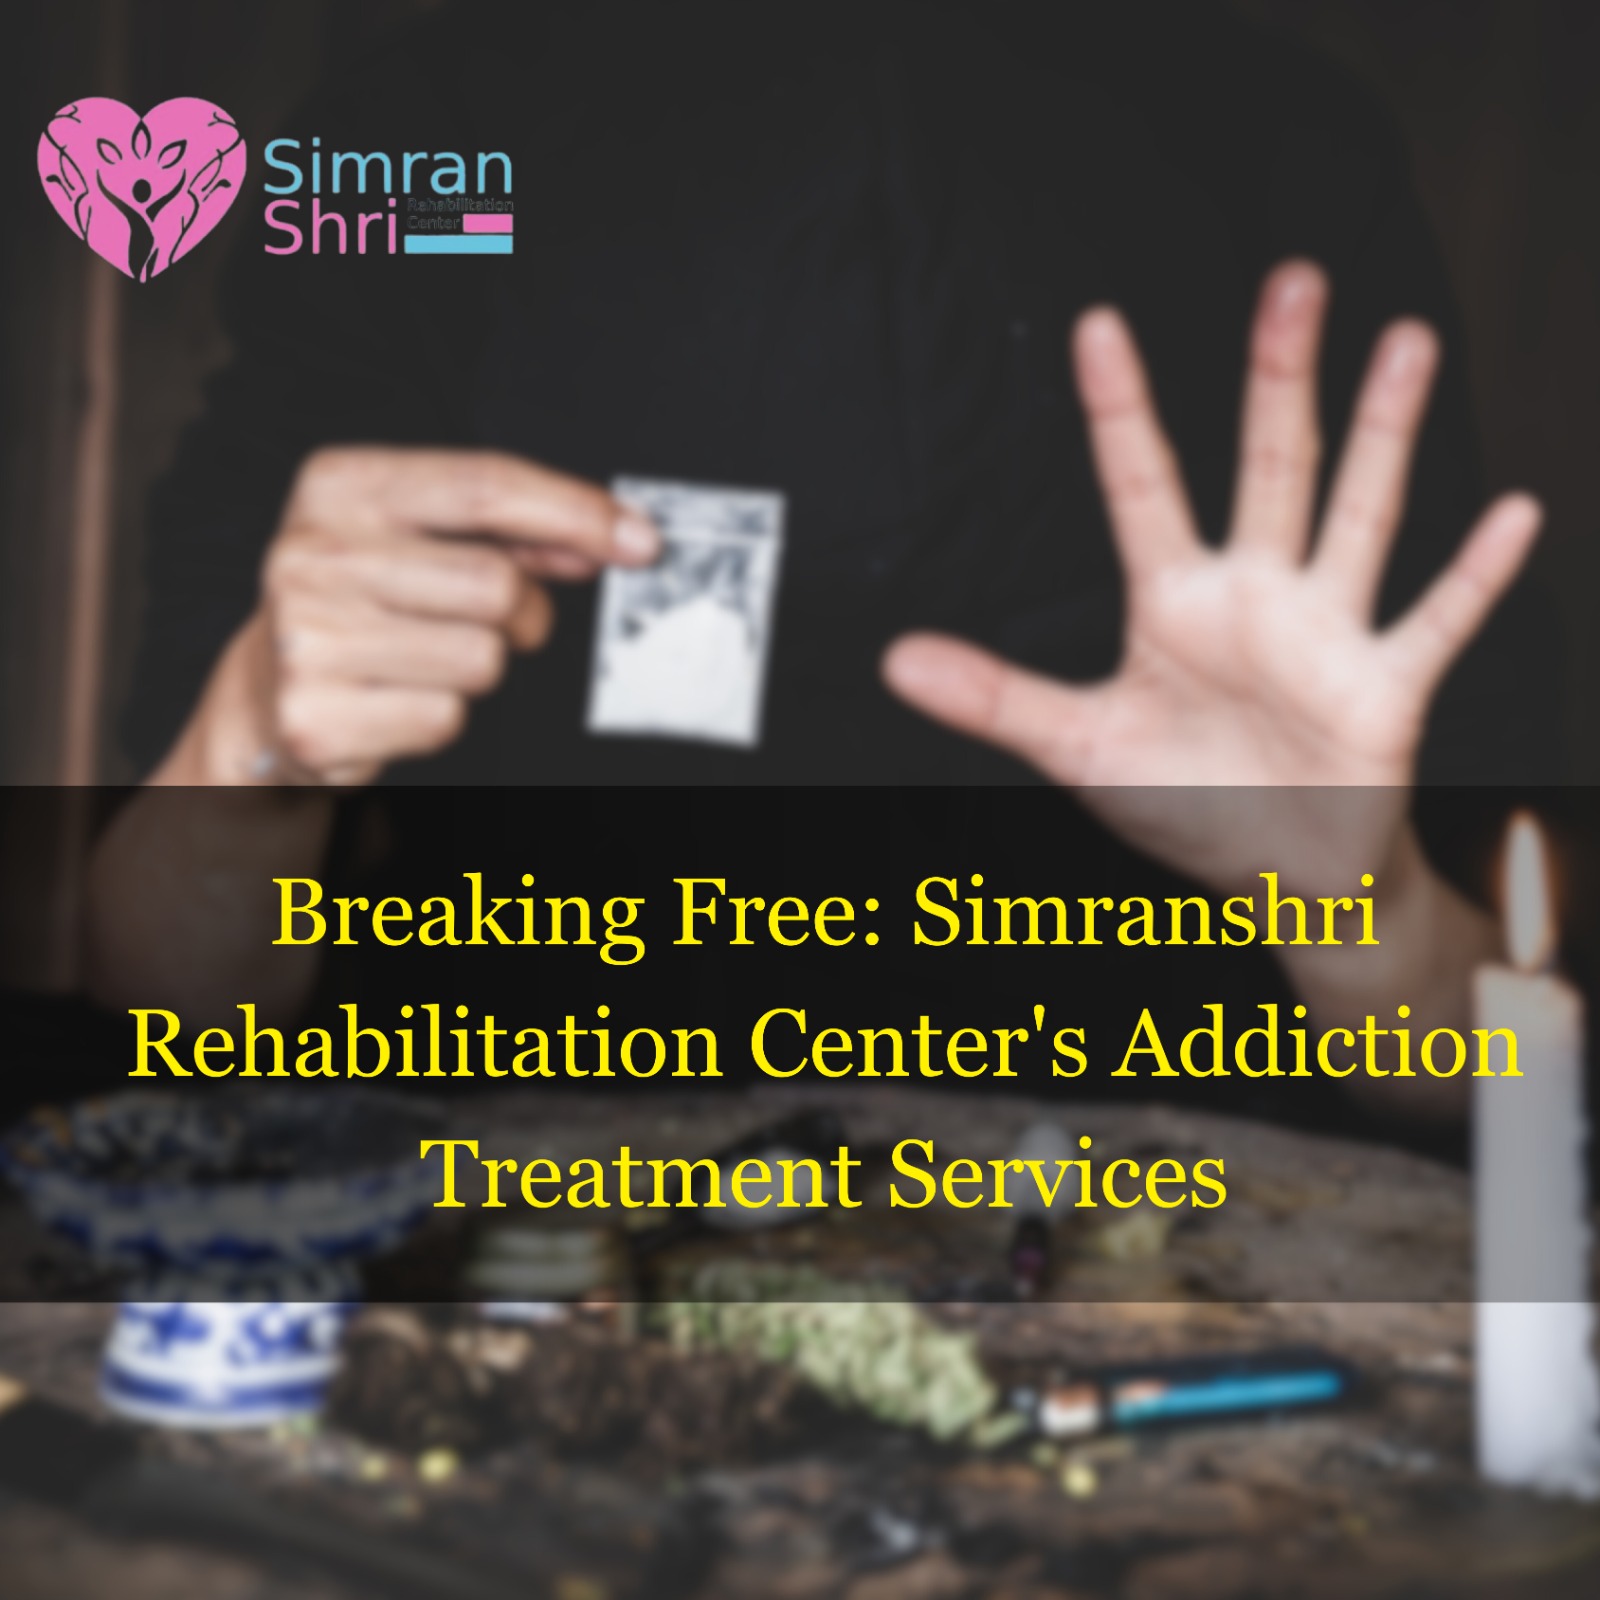 Breaking Free: Simranshri Rehabilitation Center's Addiction Treatment Services